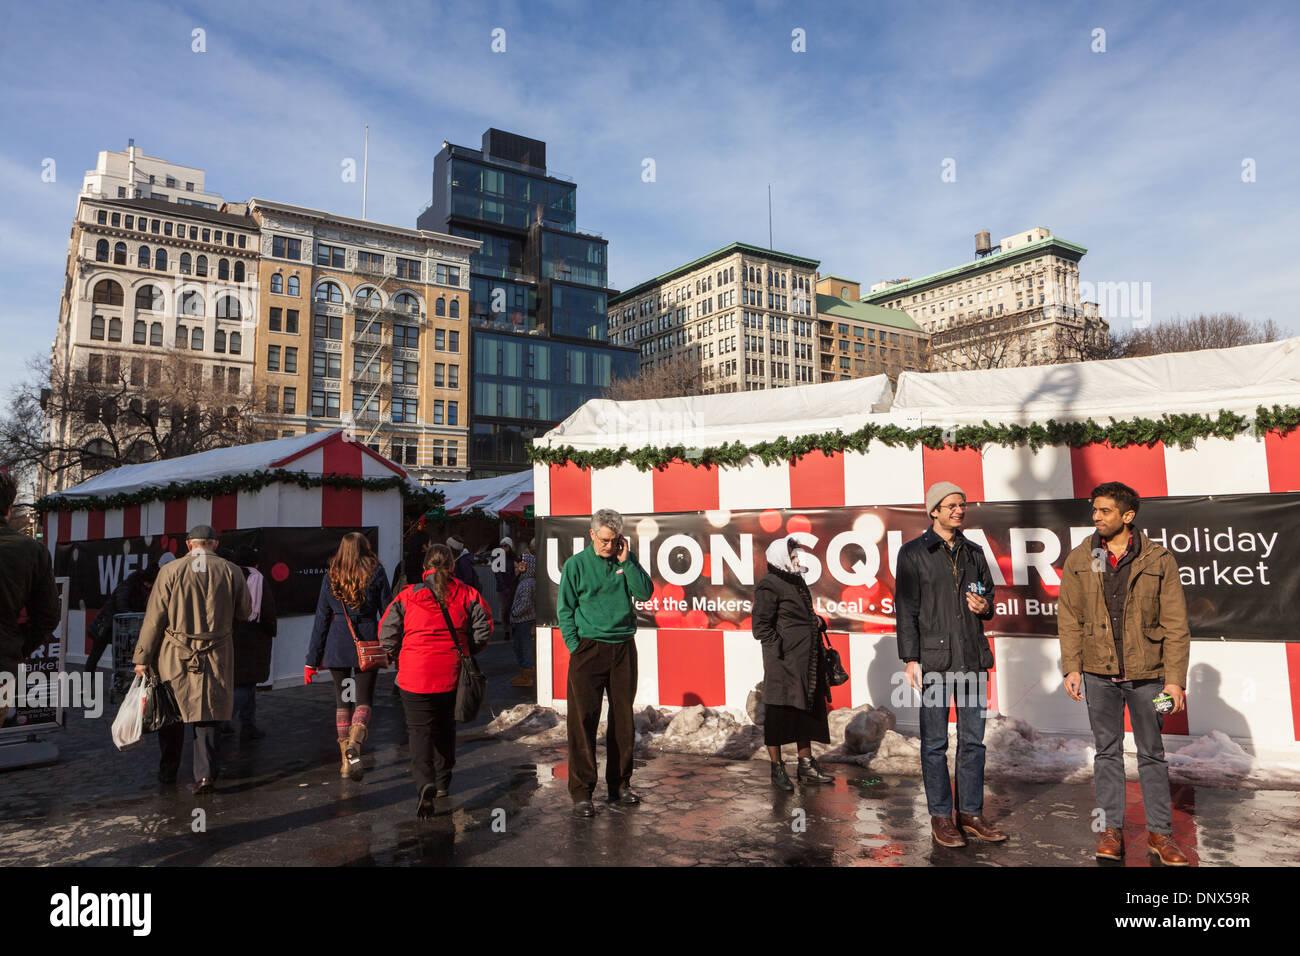 Holiday Market at Union Square, New York City. Stock Photo